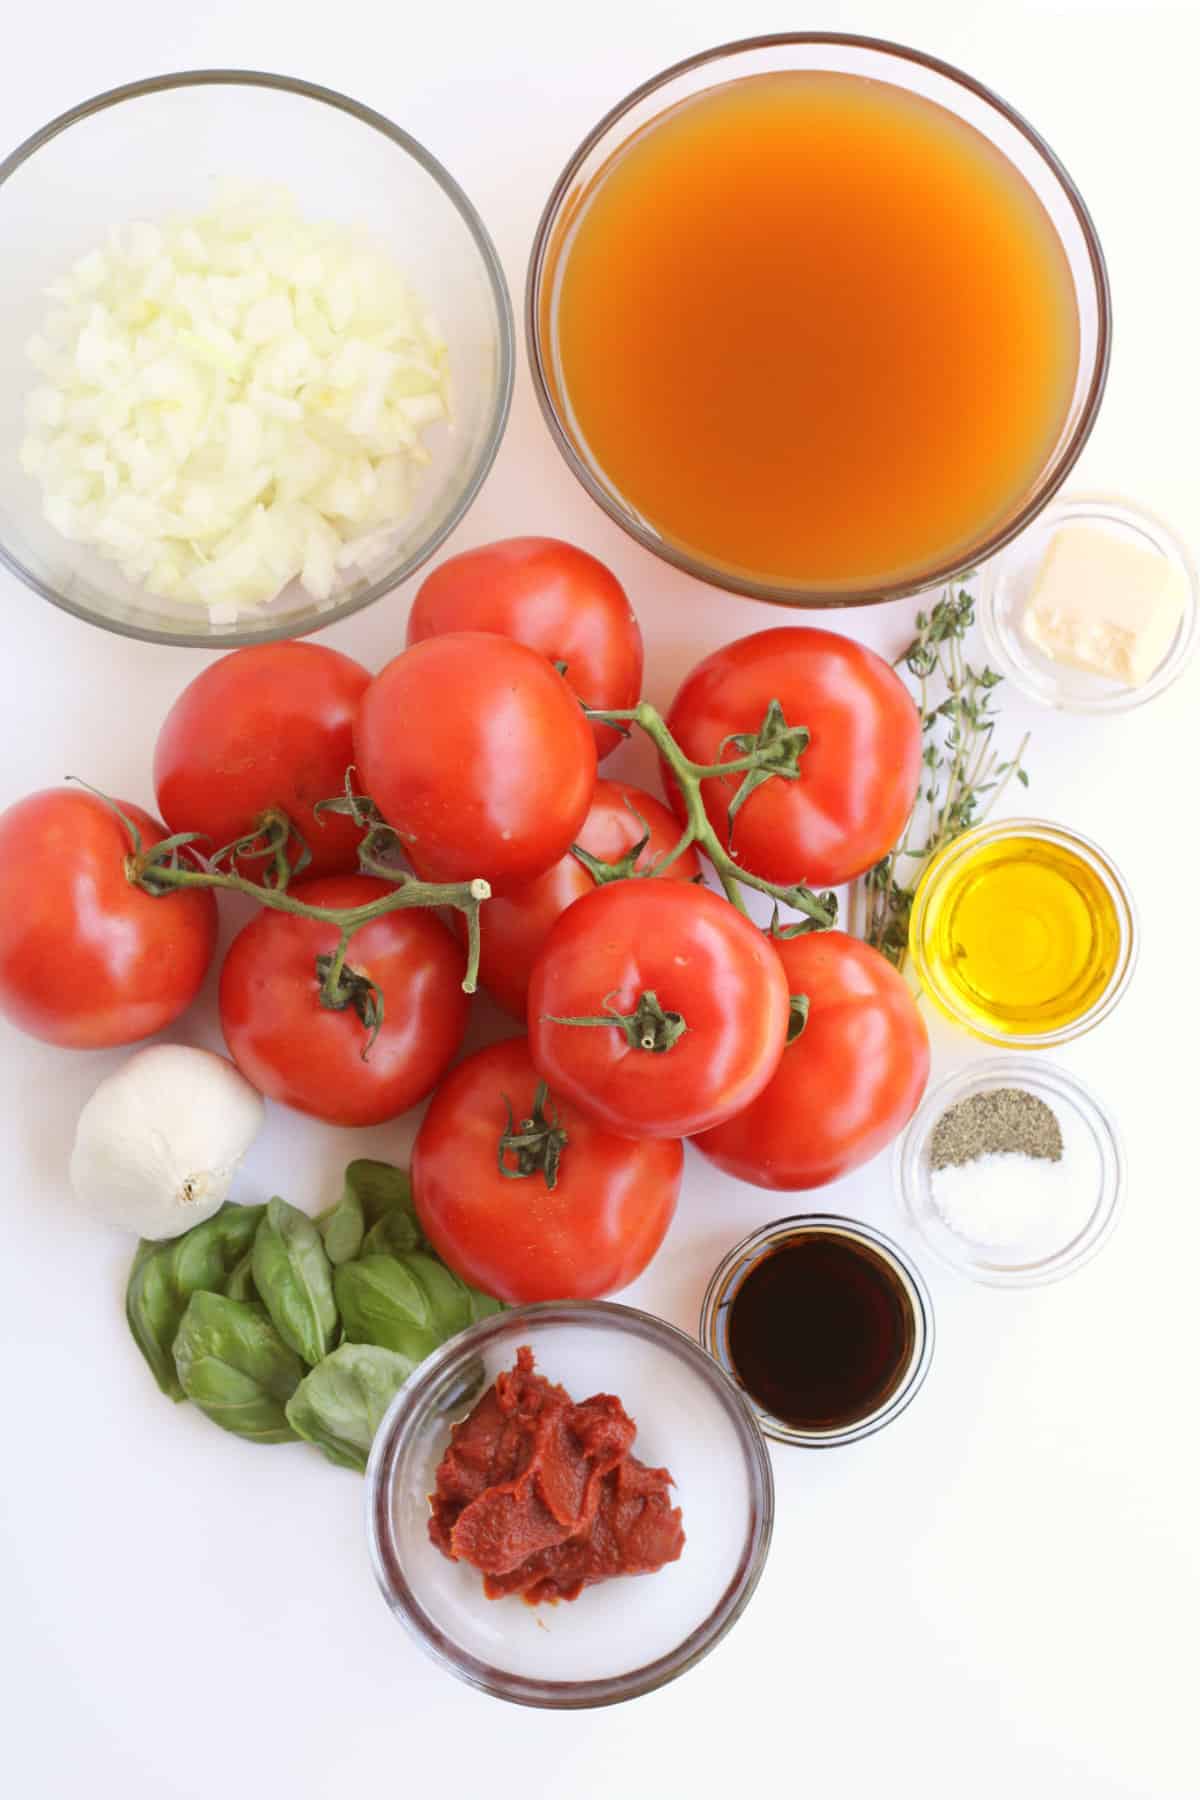 ingredients for making Panera tomato soup.